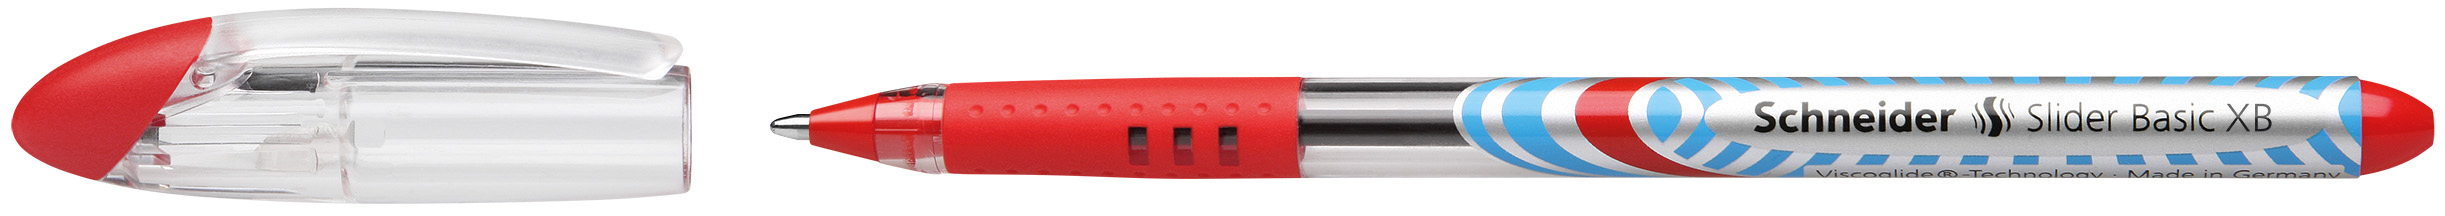 SCHNEIDER Stylo Slider Basic 1.4mm 151202 rouge, XB